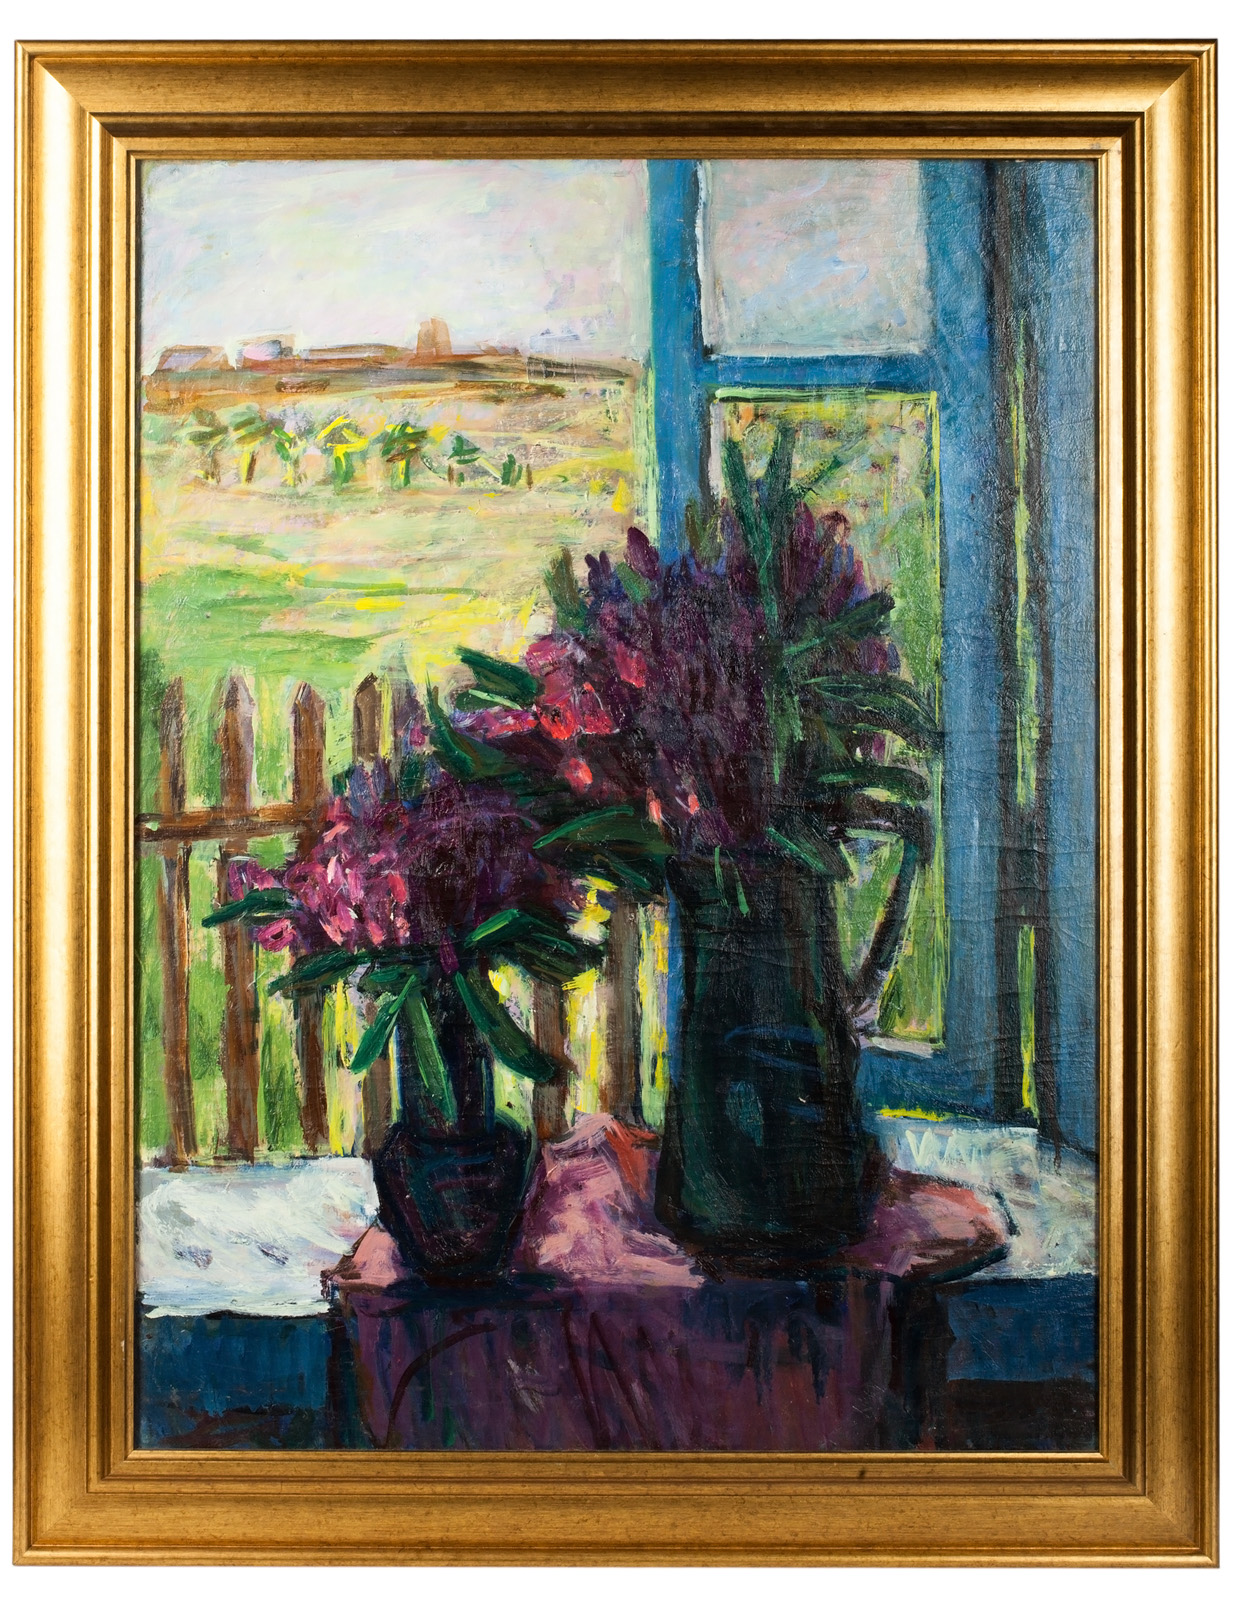 Koltsova-Bychkova Alexandra Grigoryevna. Two vases with flowers on the window. Oil on canvas. 1950s. - landofmagazines.com